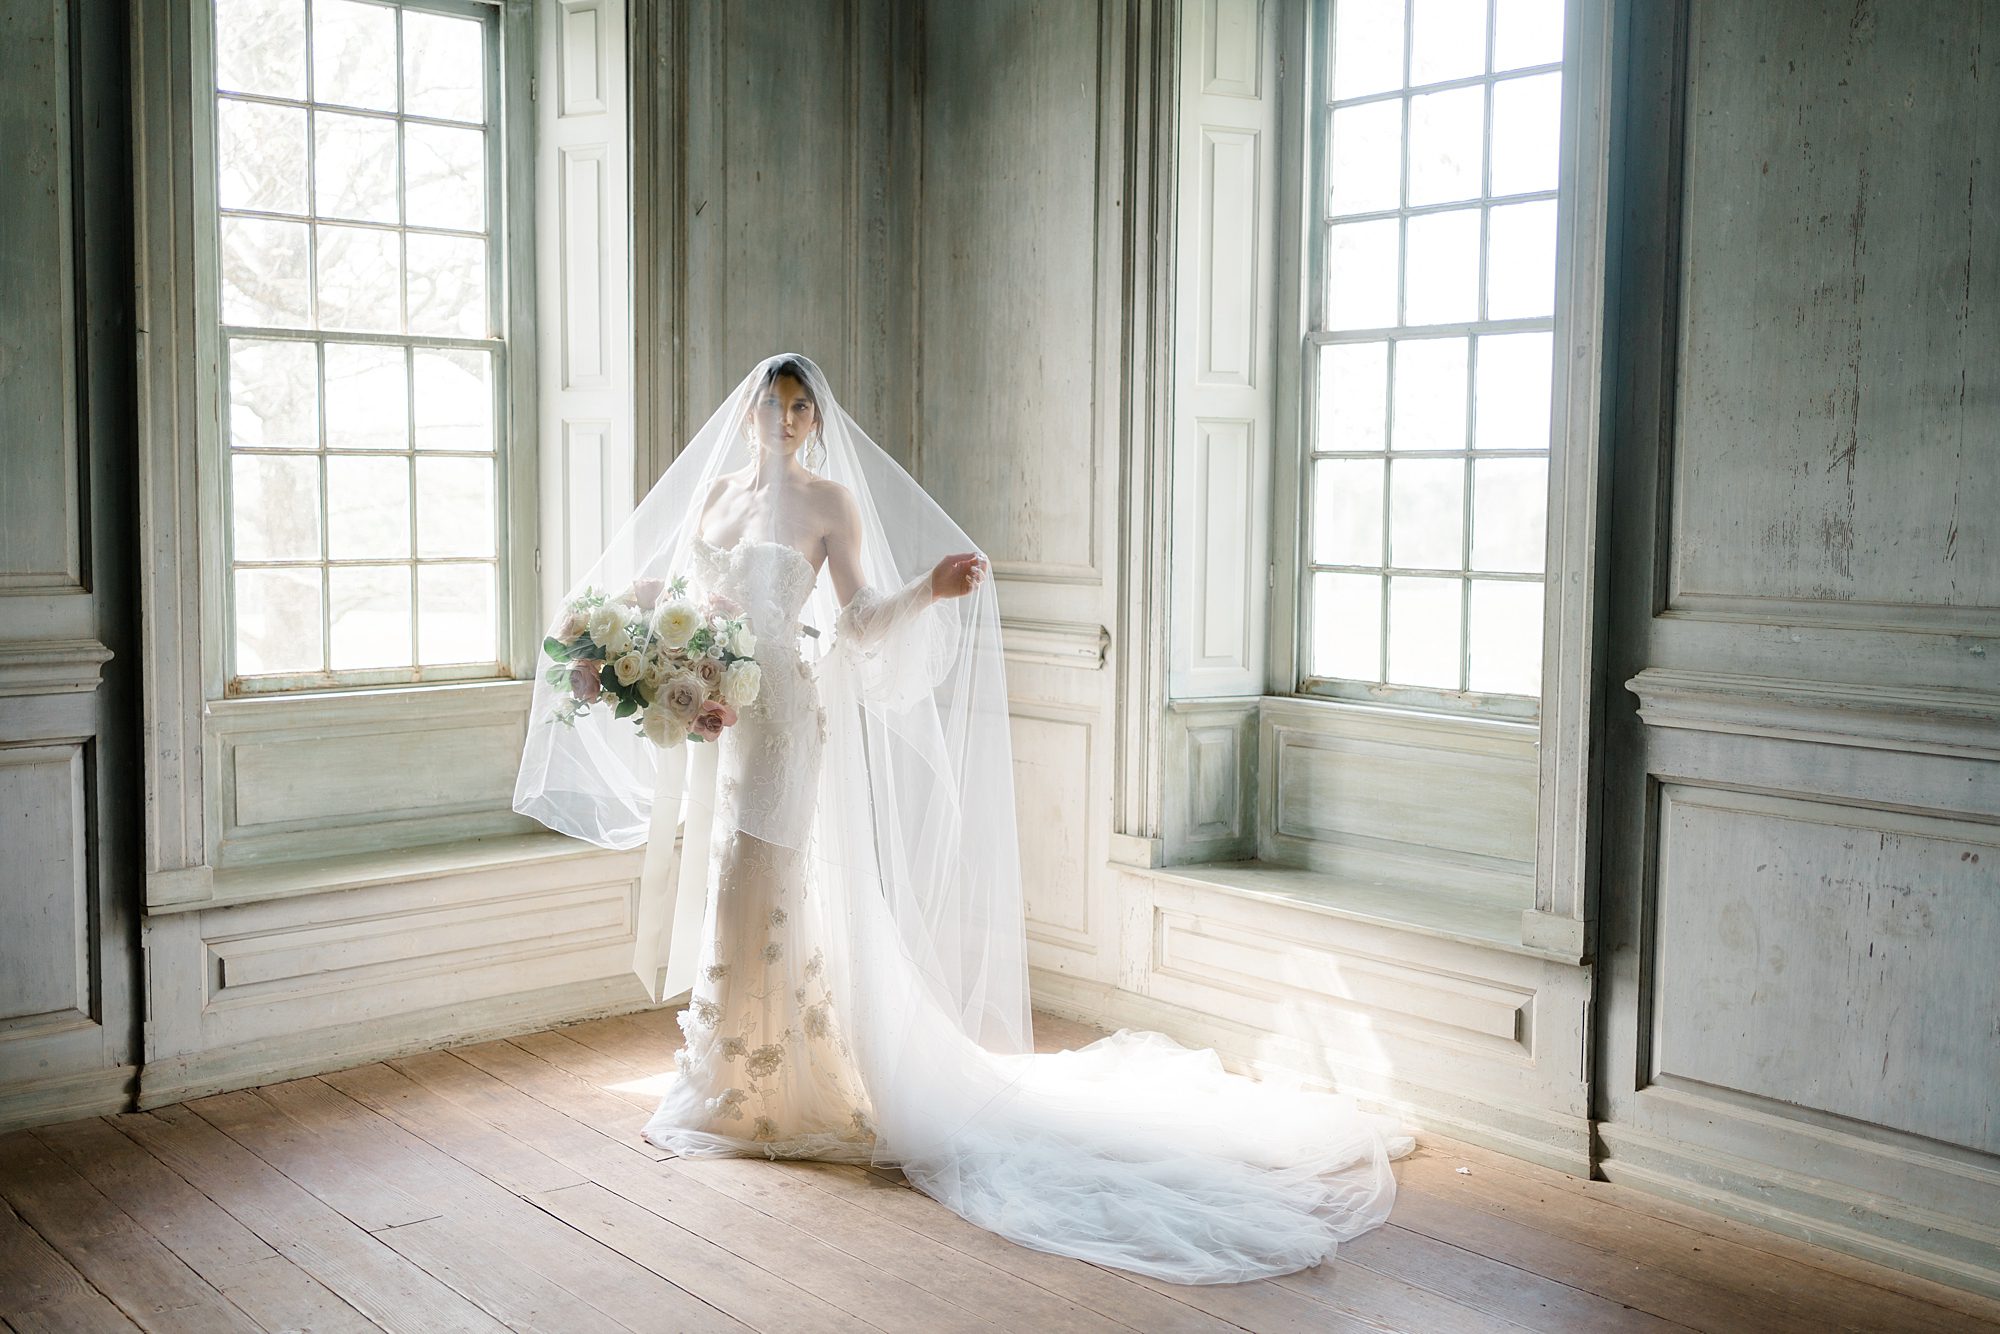 Portraits of bride under veil